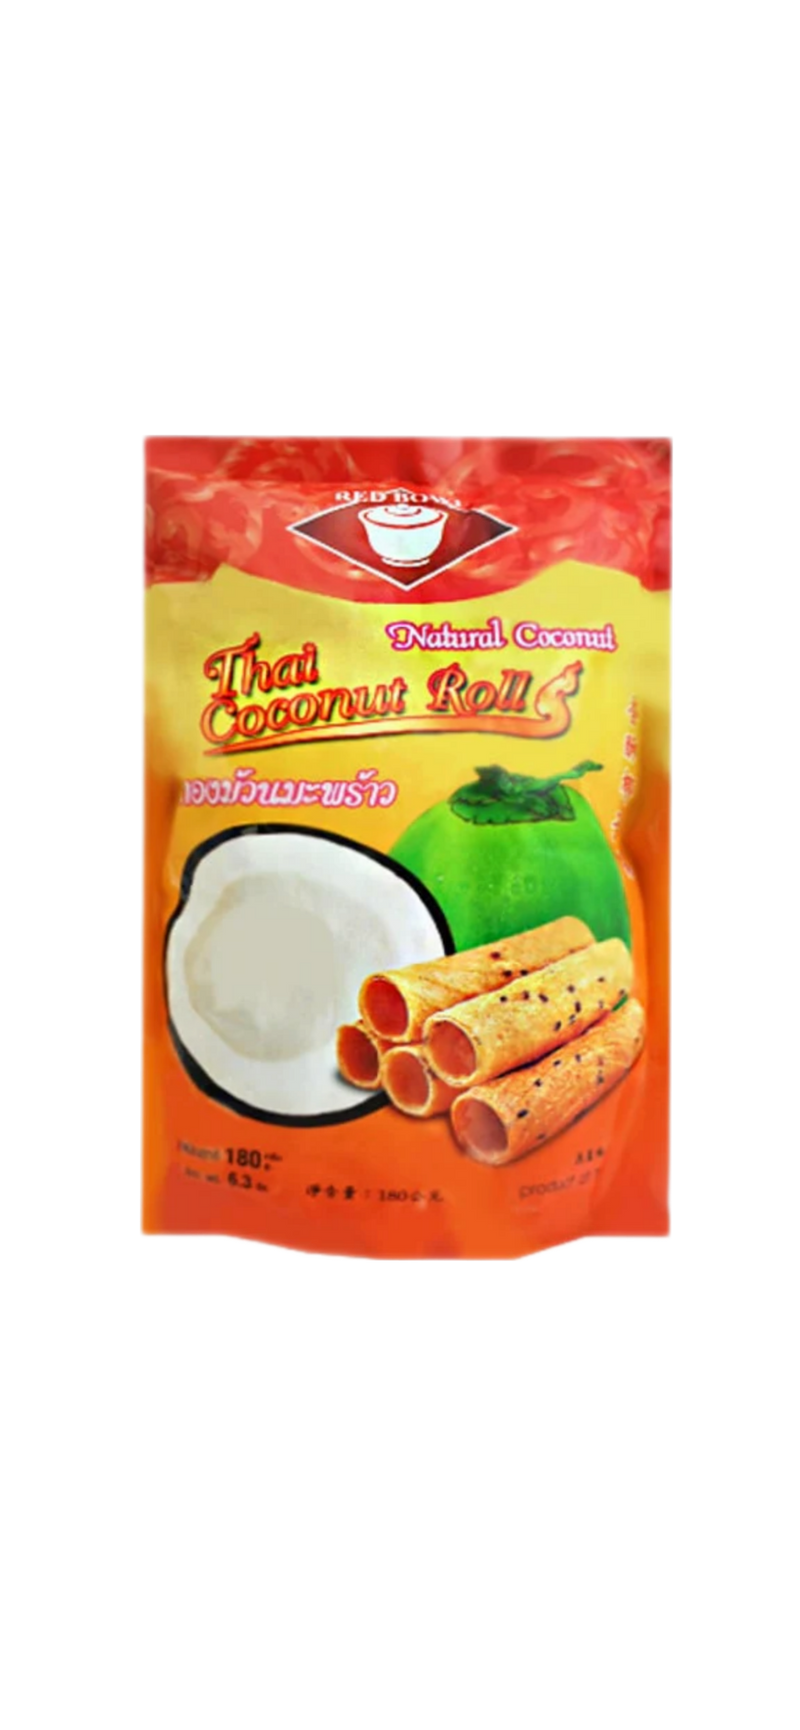 Red Bowl Coconut Roll Original Flavor